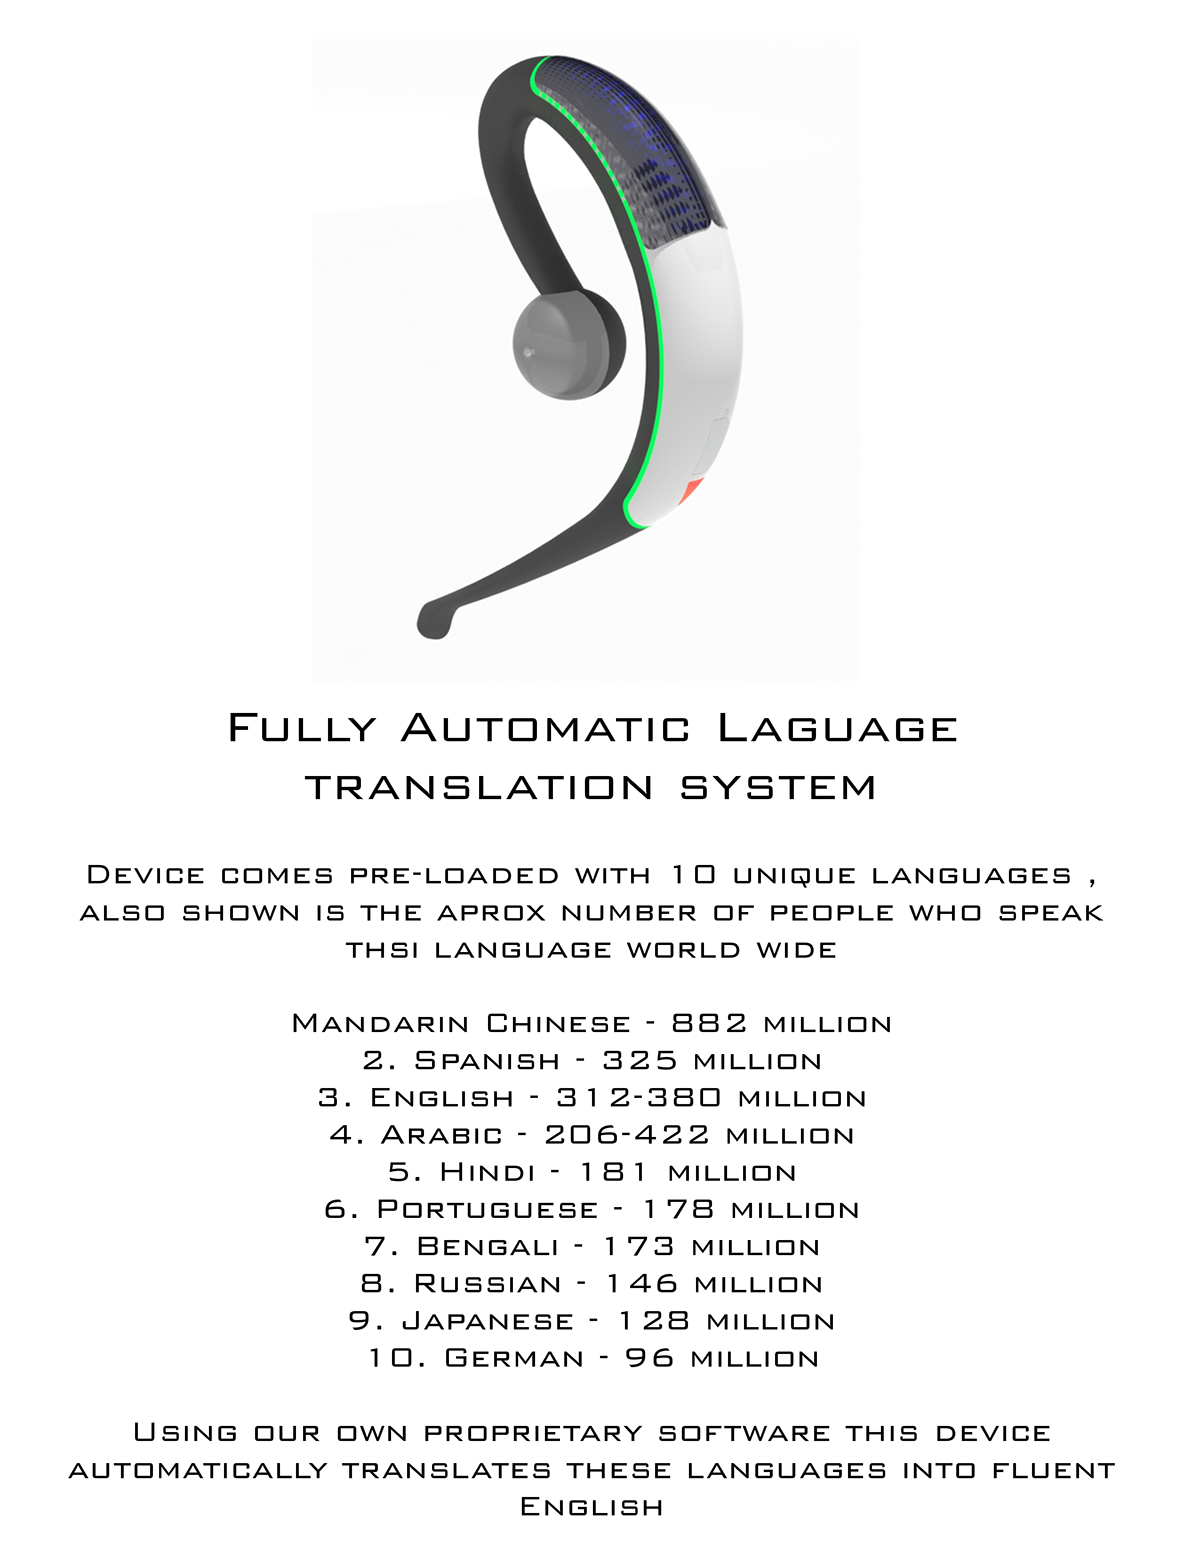 langomatic concept universal translator bluetooth headset mic solar RECHARGE language